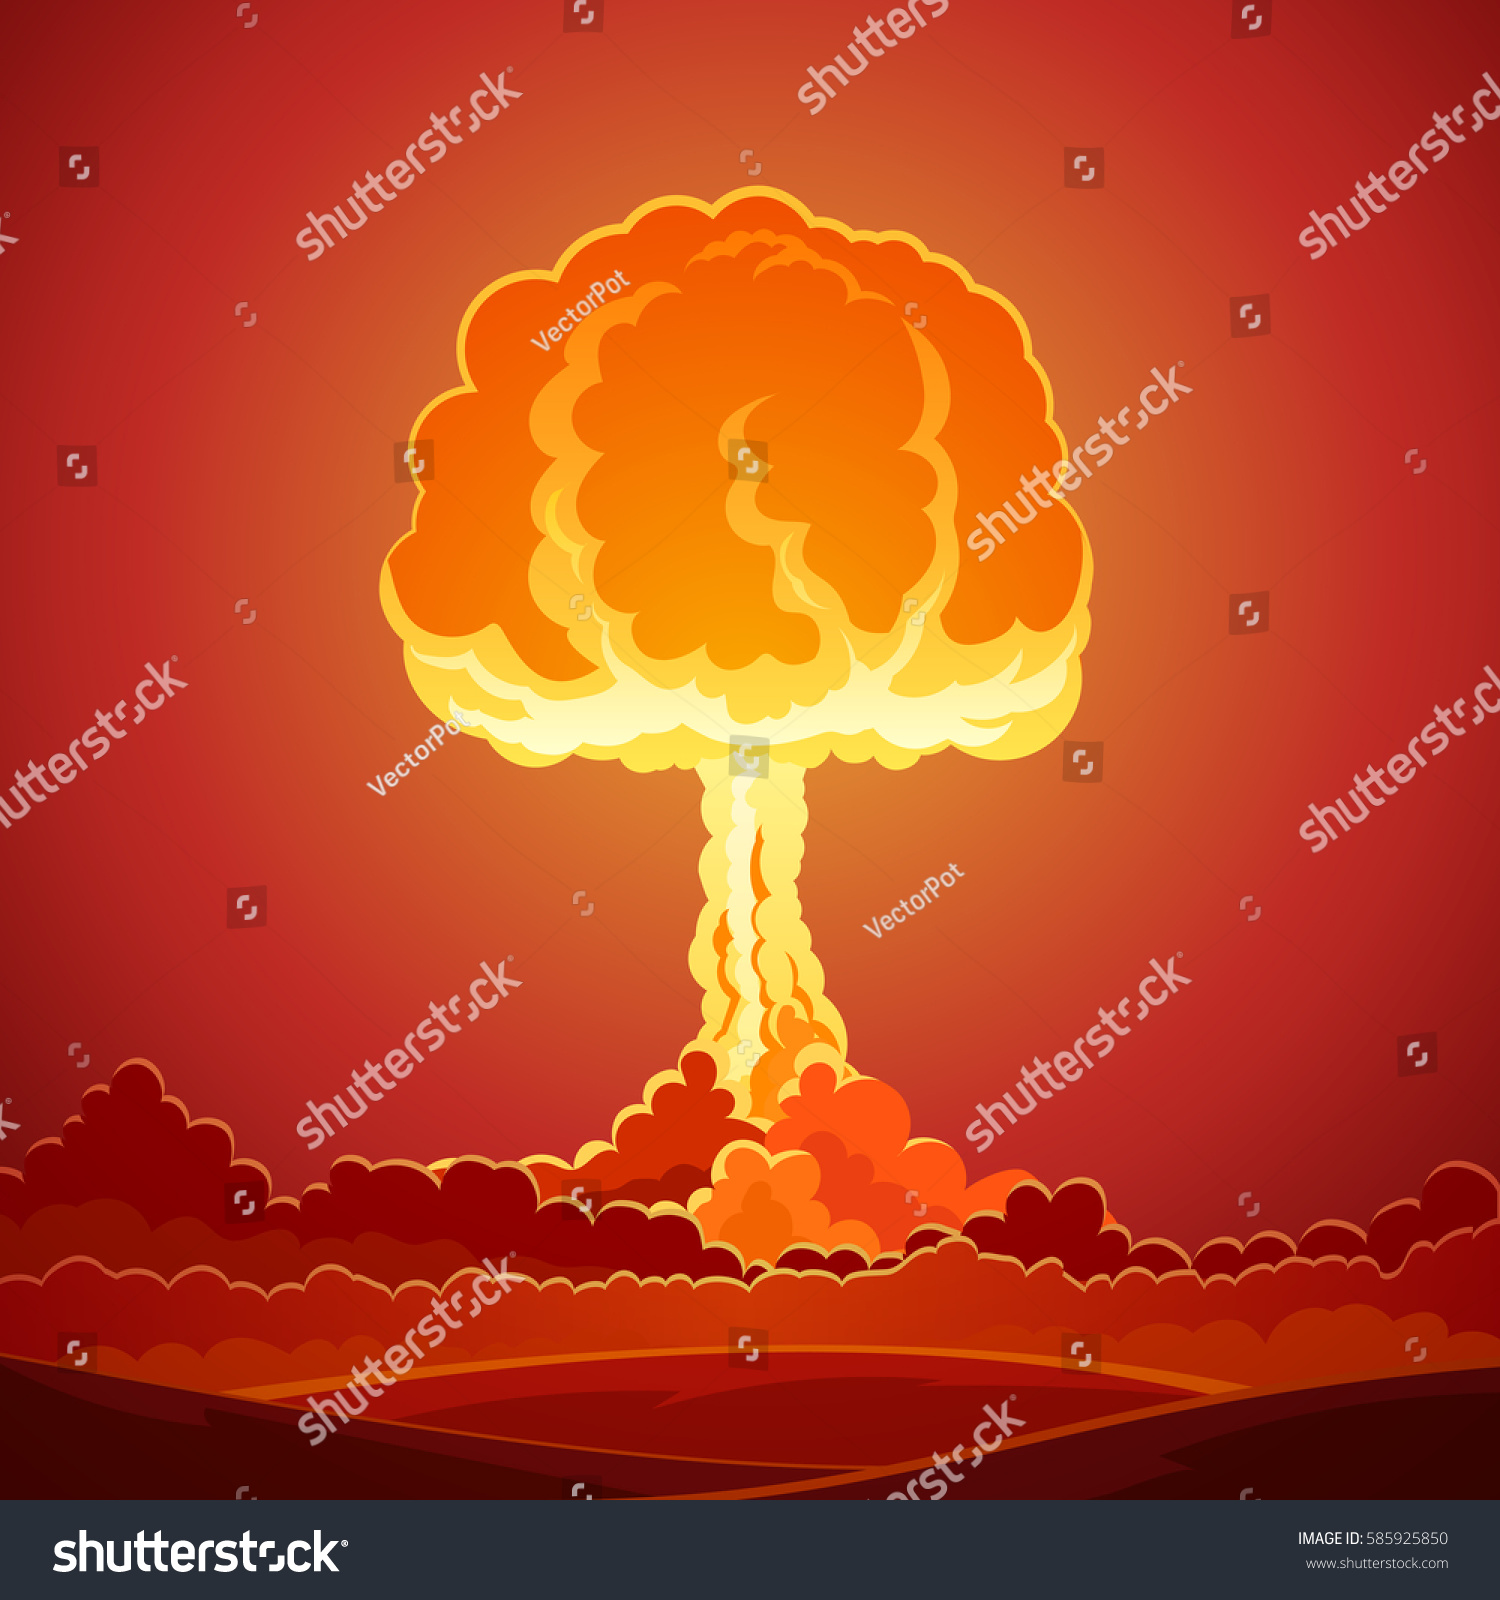 Nuclear Bomb Explosion Template Bright Mushroom のベクター画像素材 ロイヤリティフリー 585925850